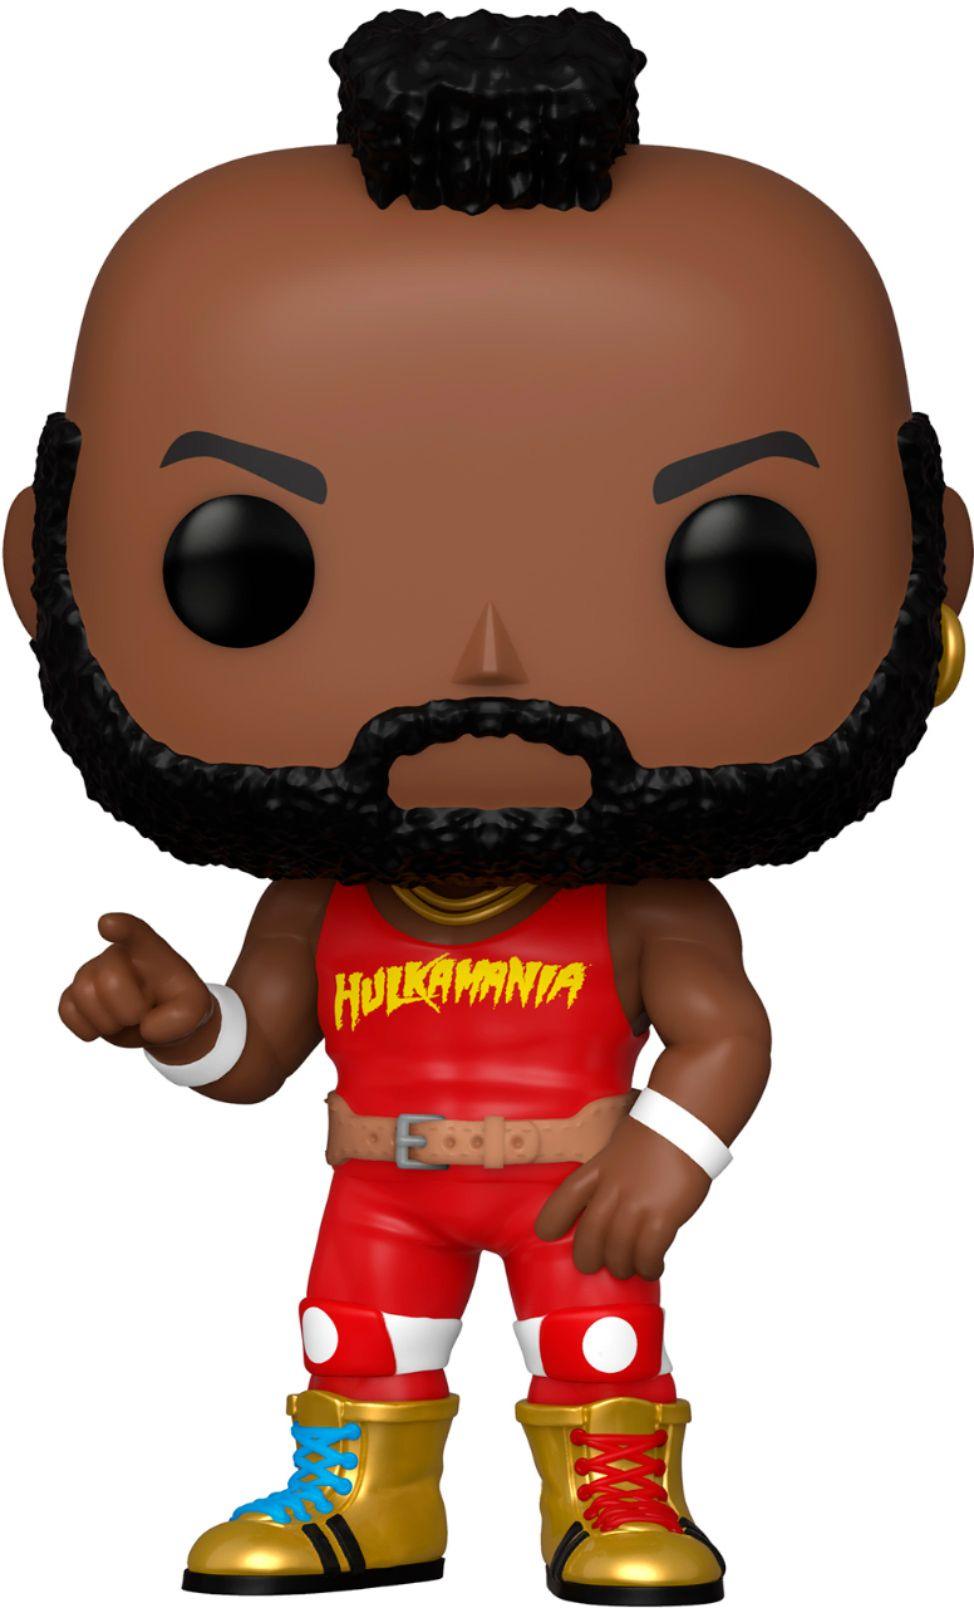 Pop! WWE - Mr. T - #80 - Hobby Champion Inc